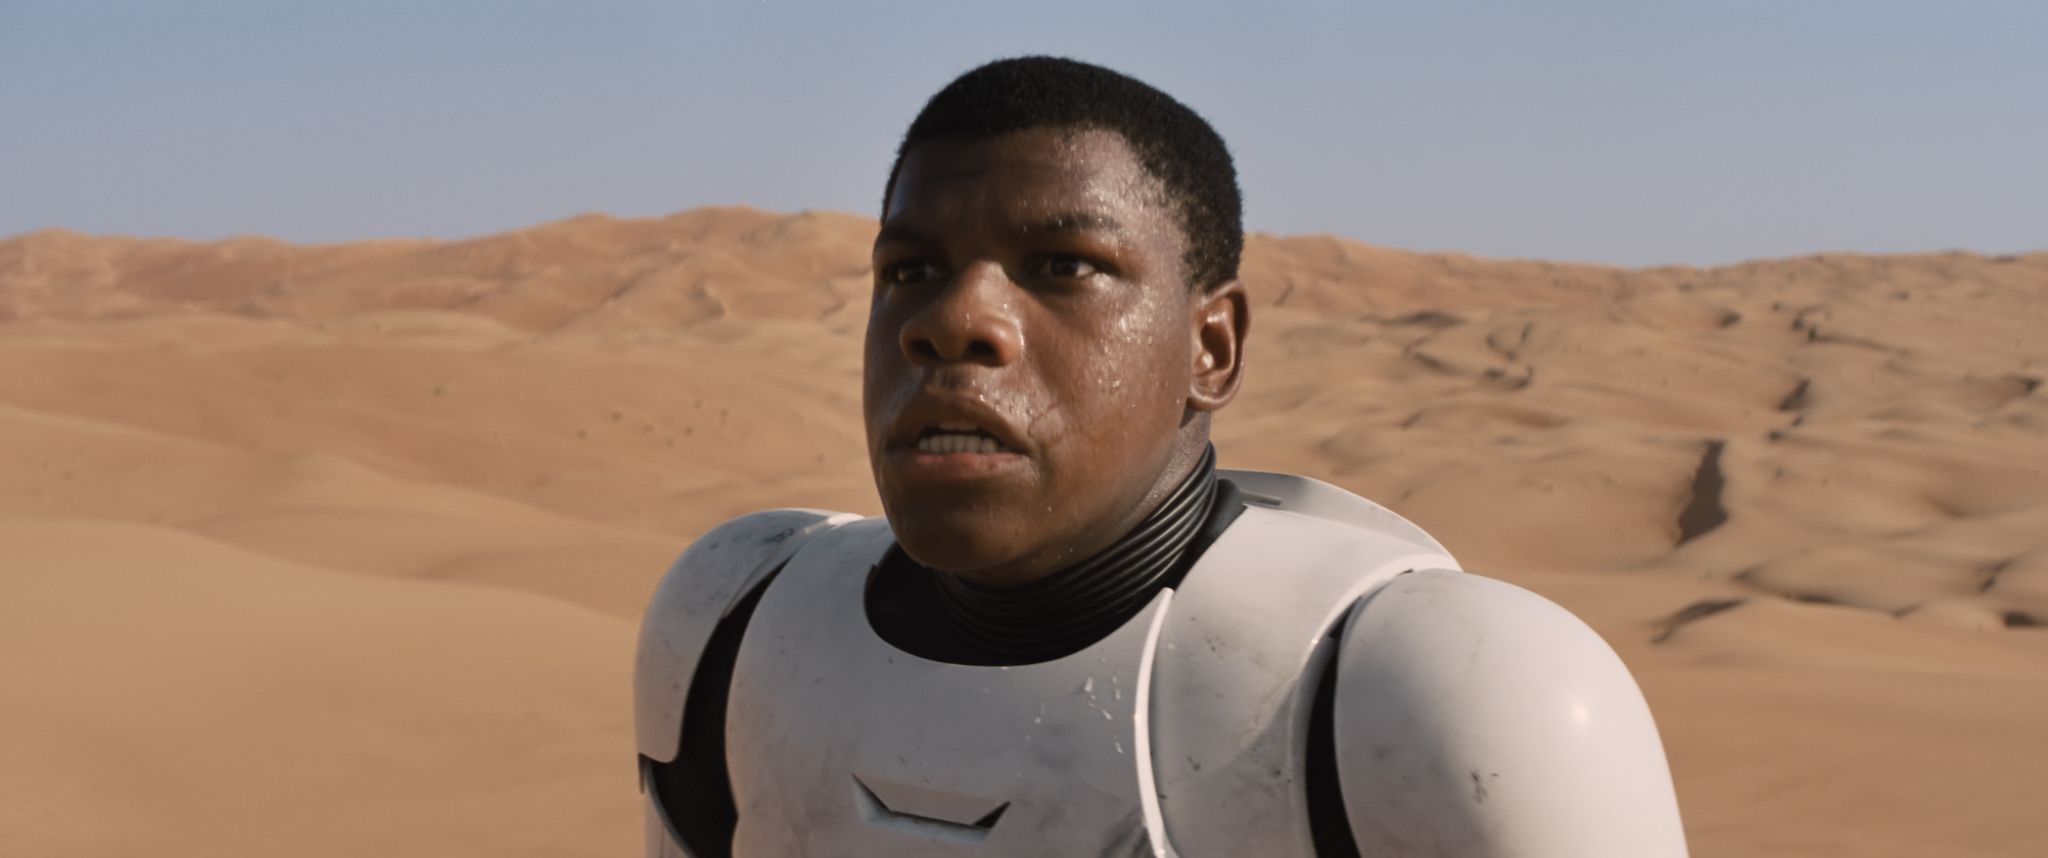 John Boyega wears the new Stormtrooper suit in Star Wars: The Force Awakens